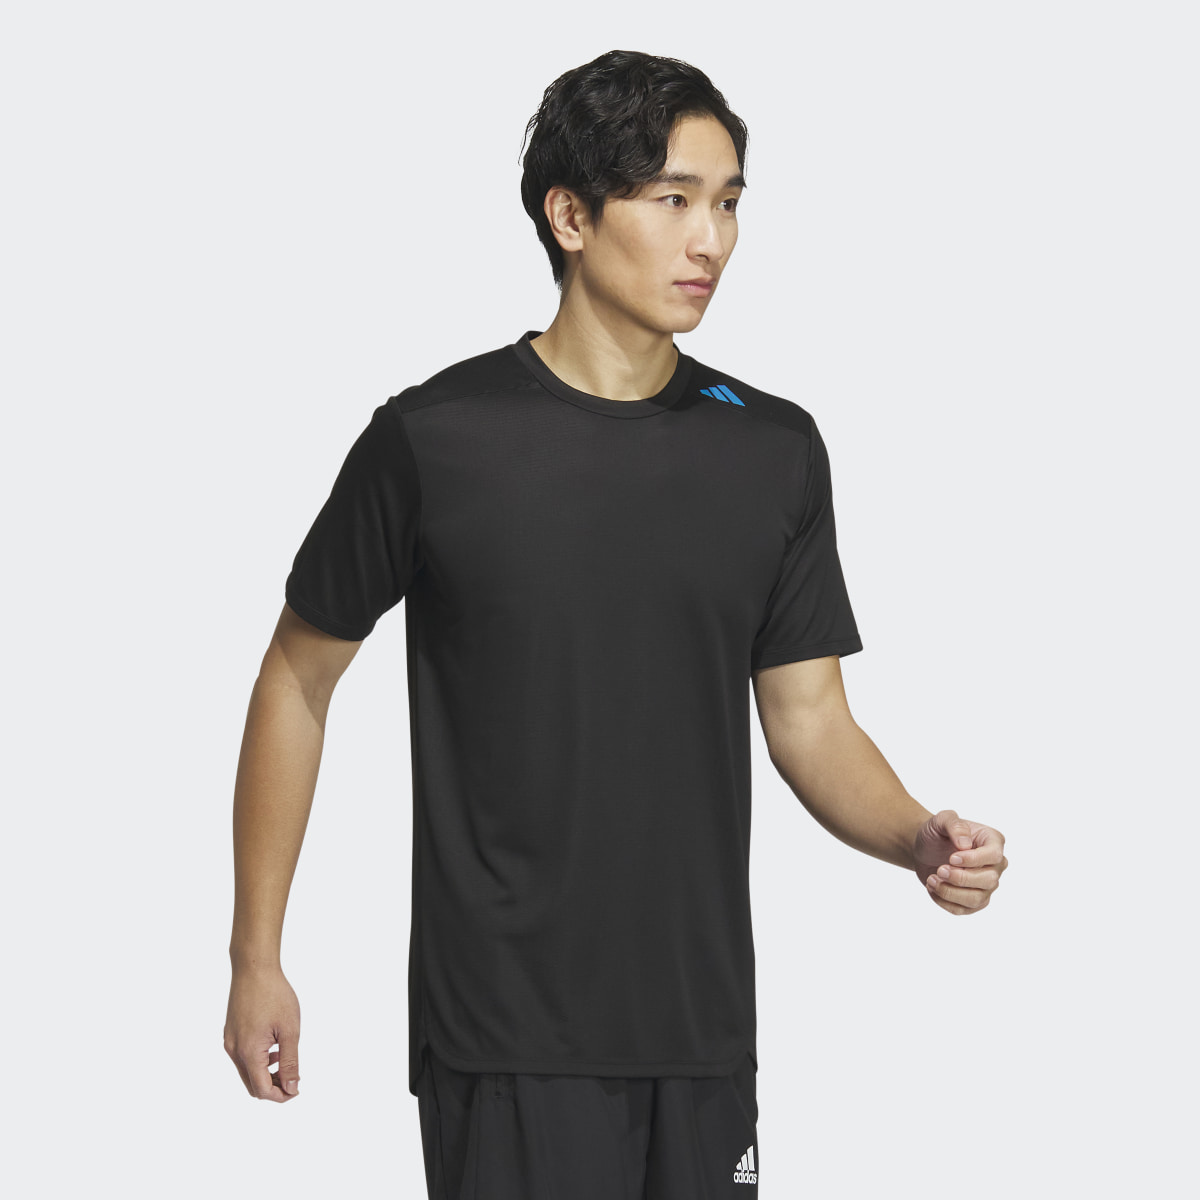 Adidas Designed 4 Training HEAT.RDY HIIT Training T-Shirt. 4